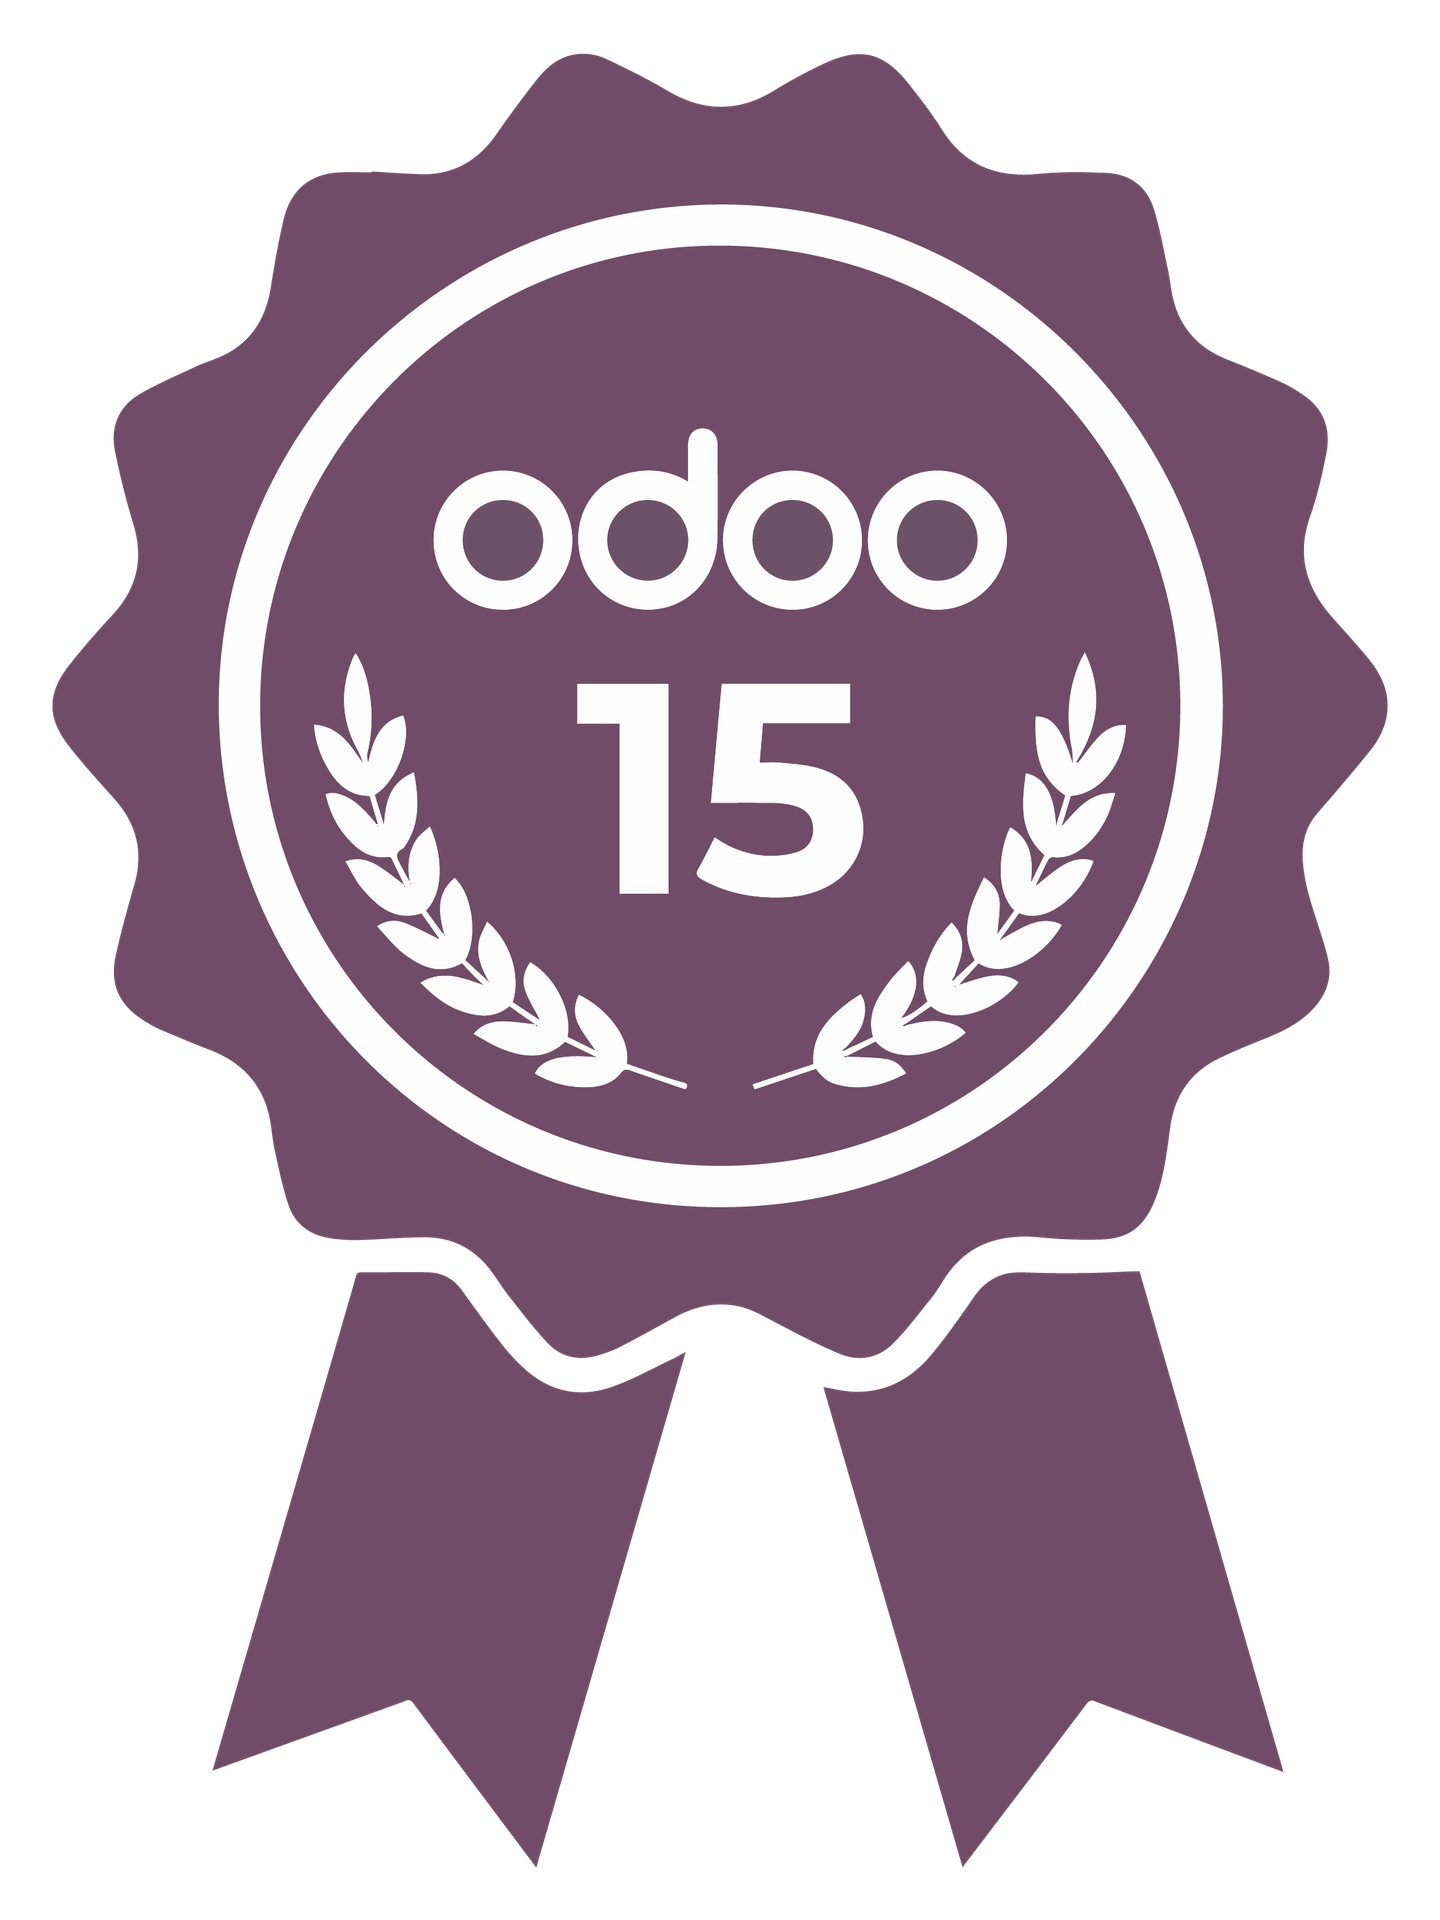 Garber, partner Certificado de Odoo 15